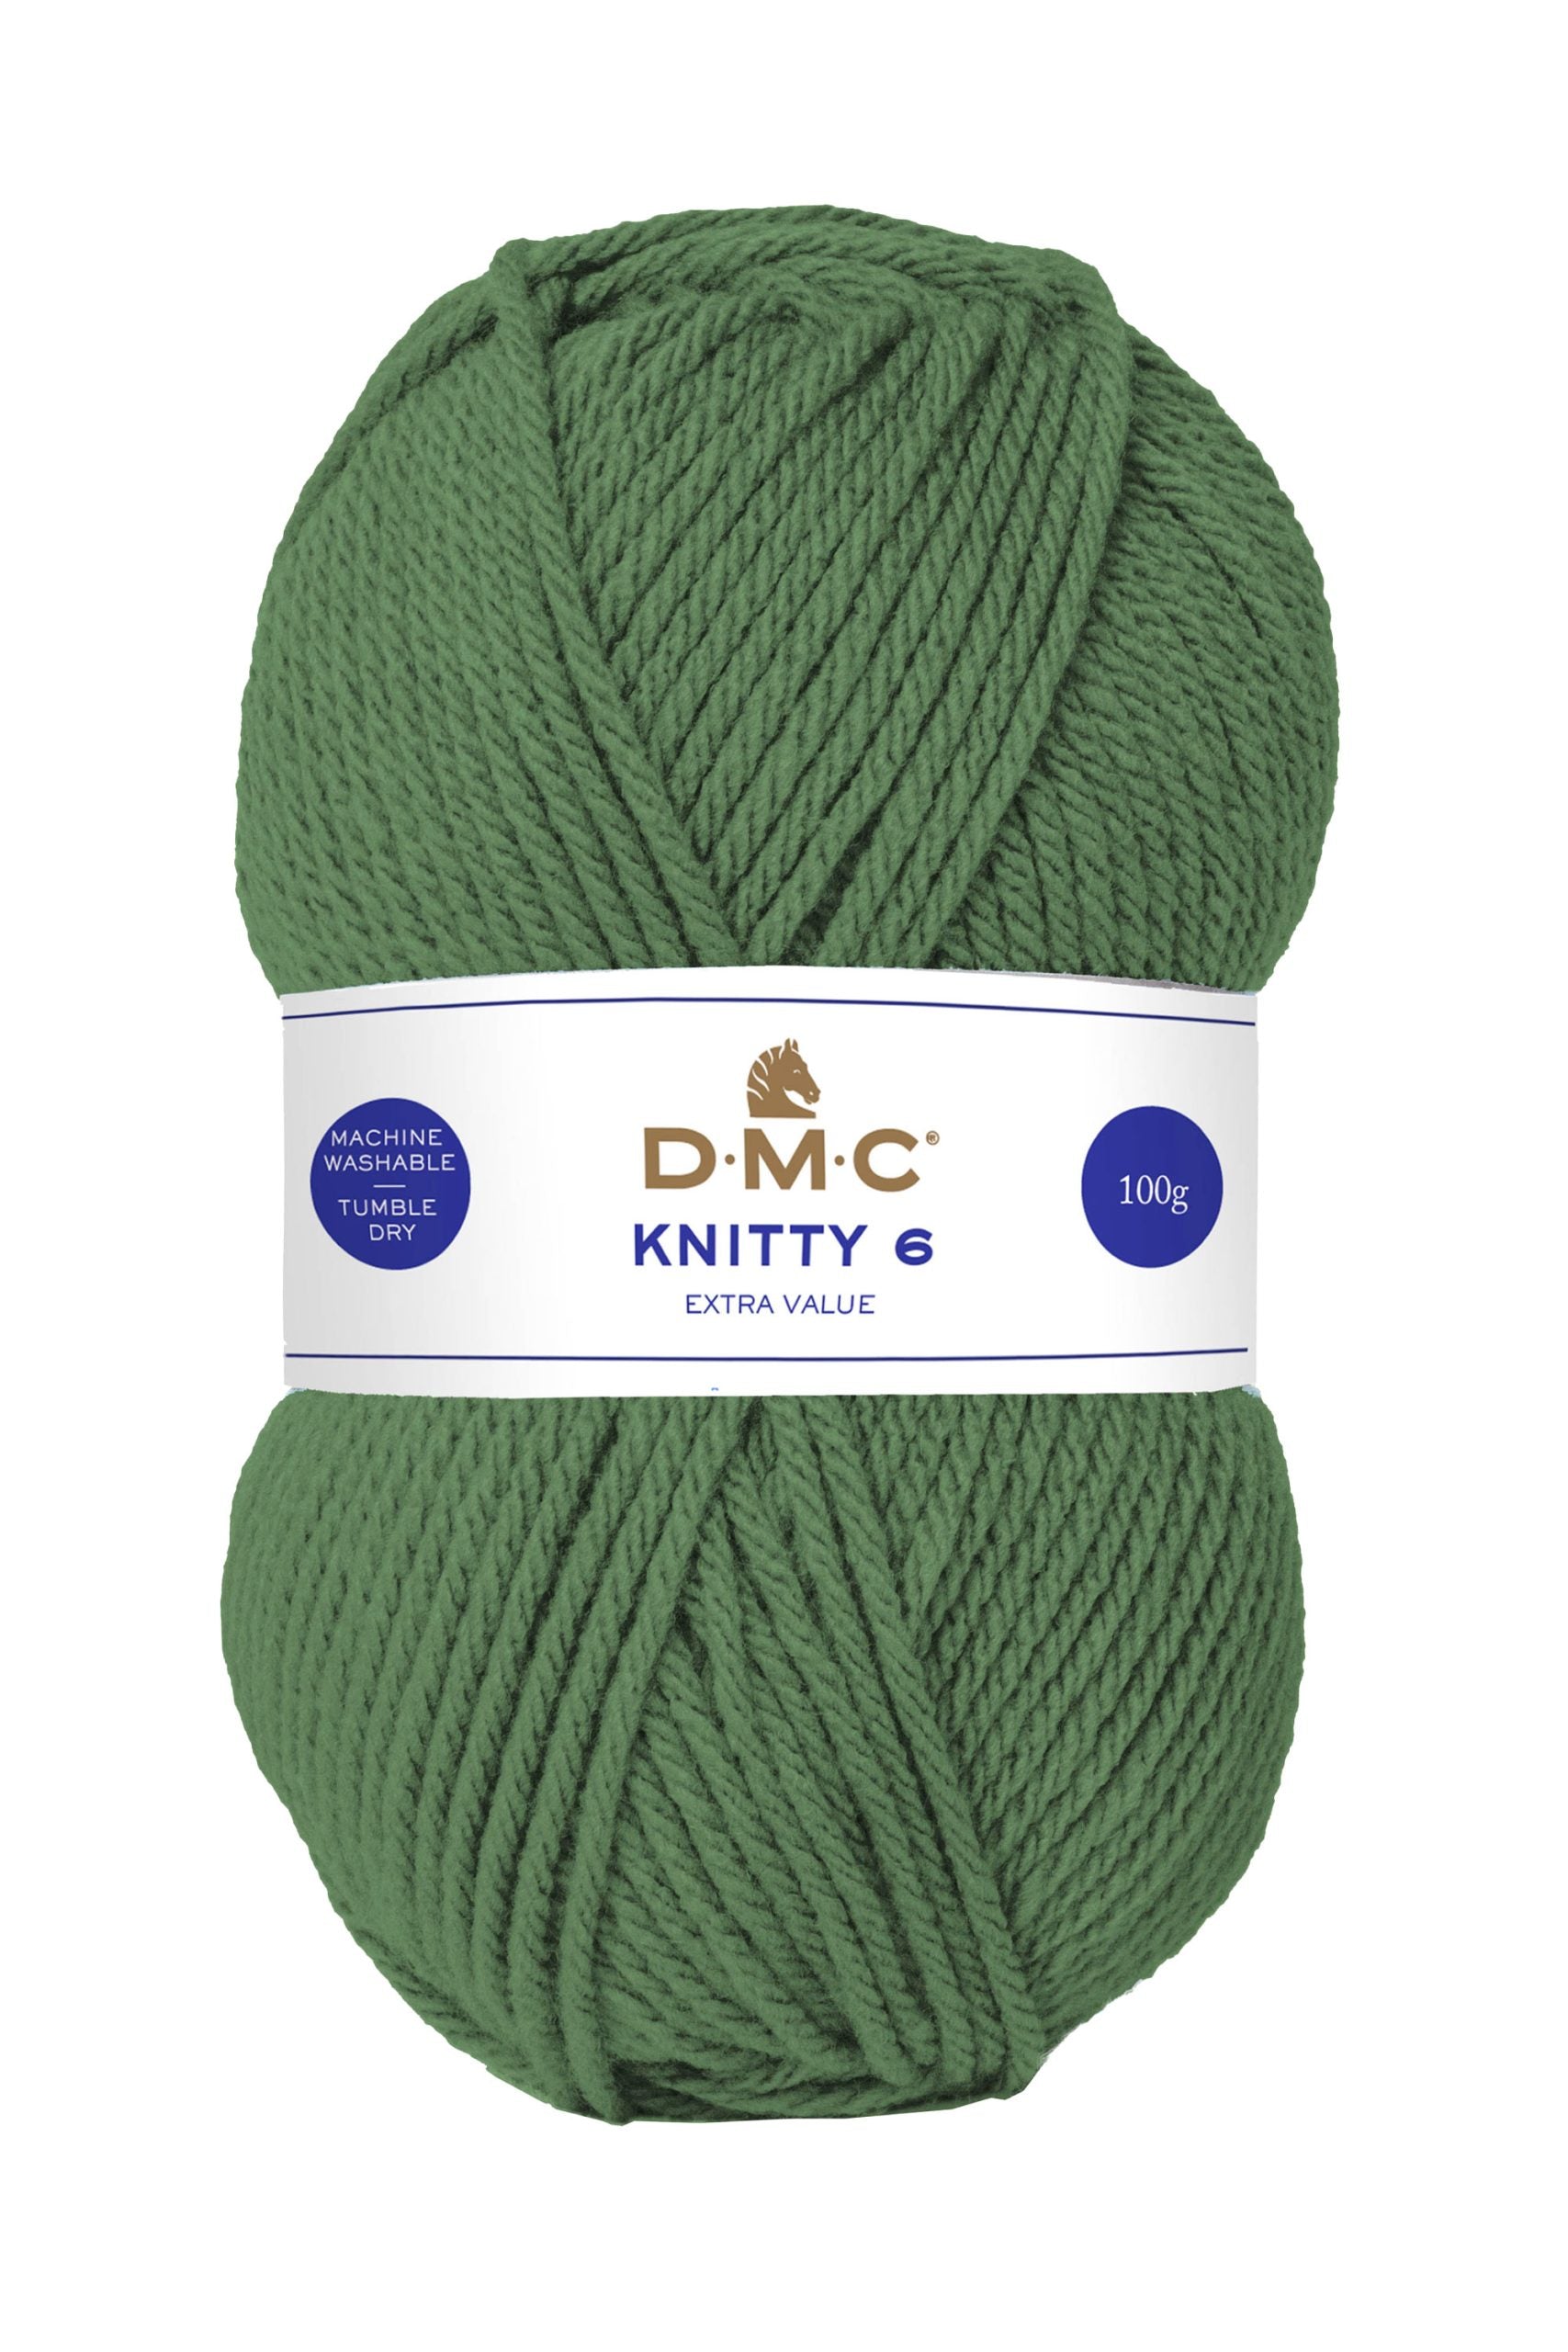 Lana Dmc Knitty 6 Colore 904